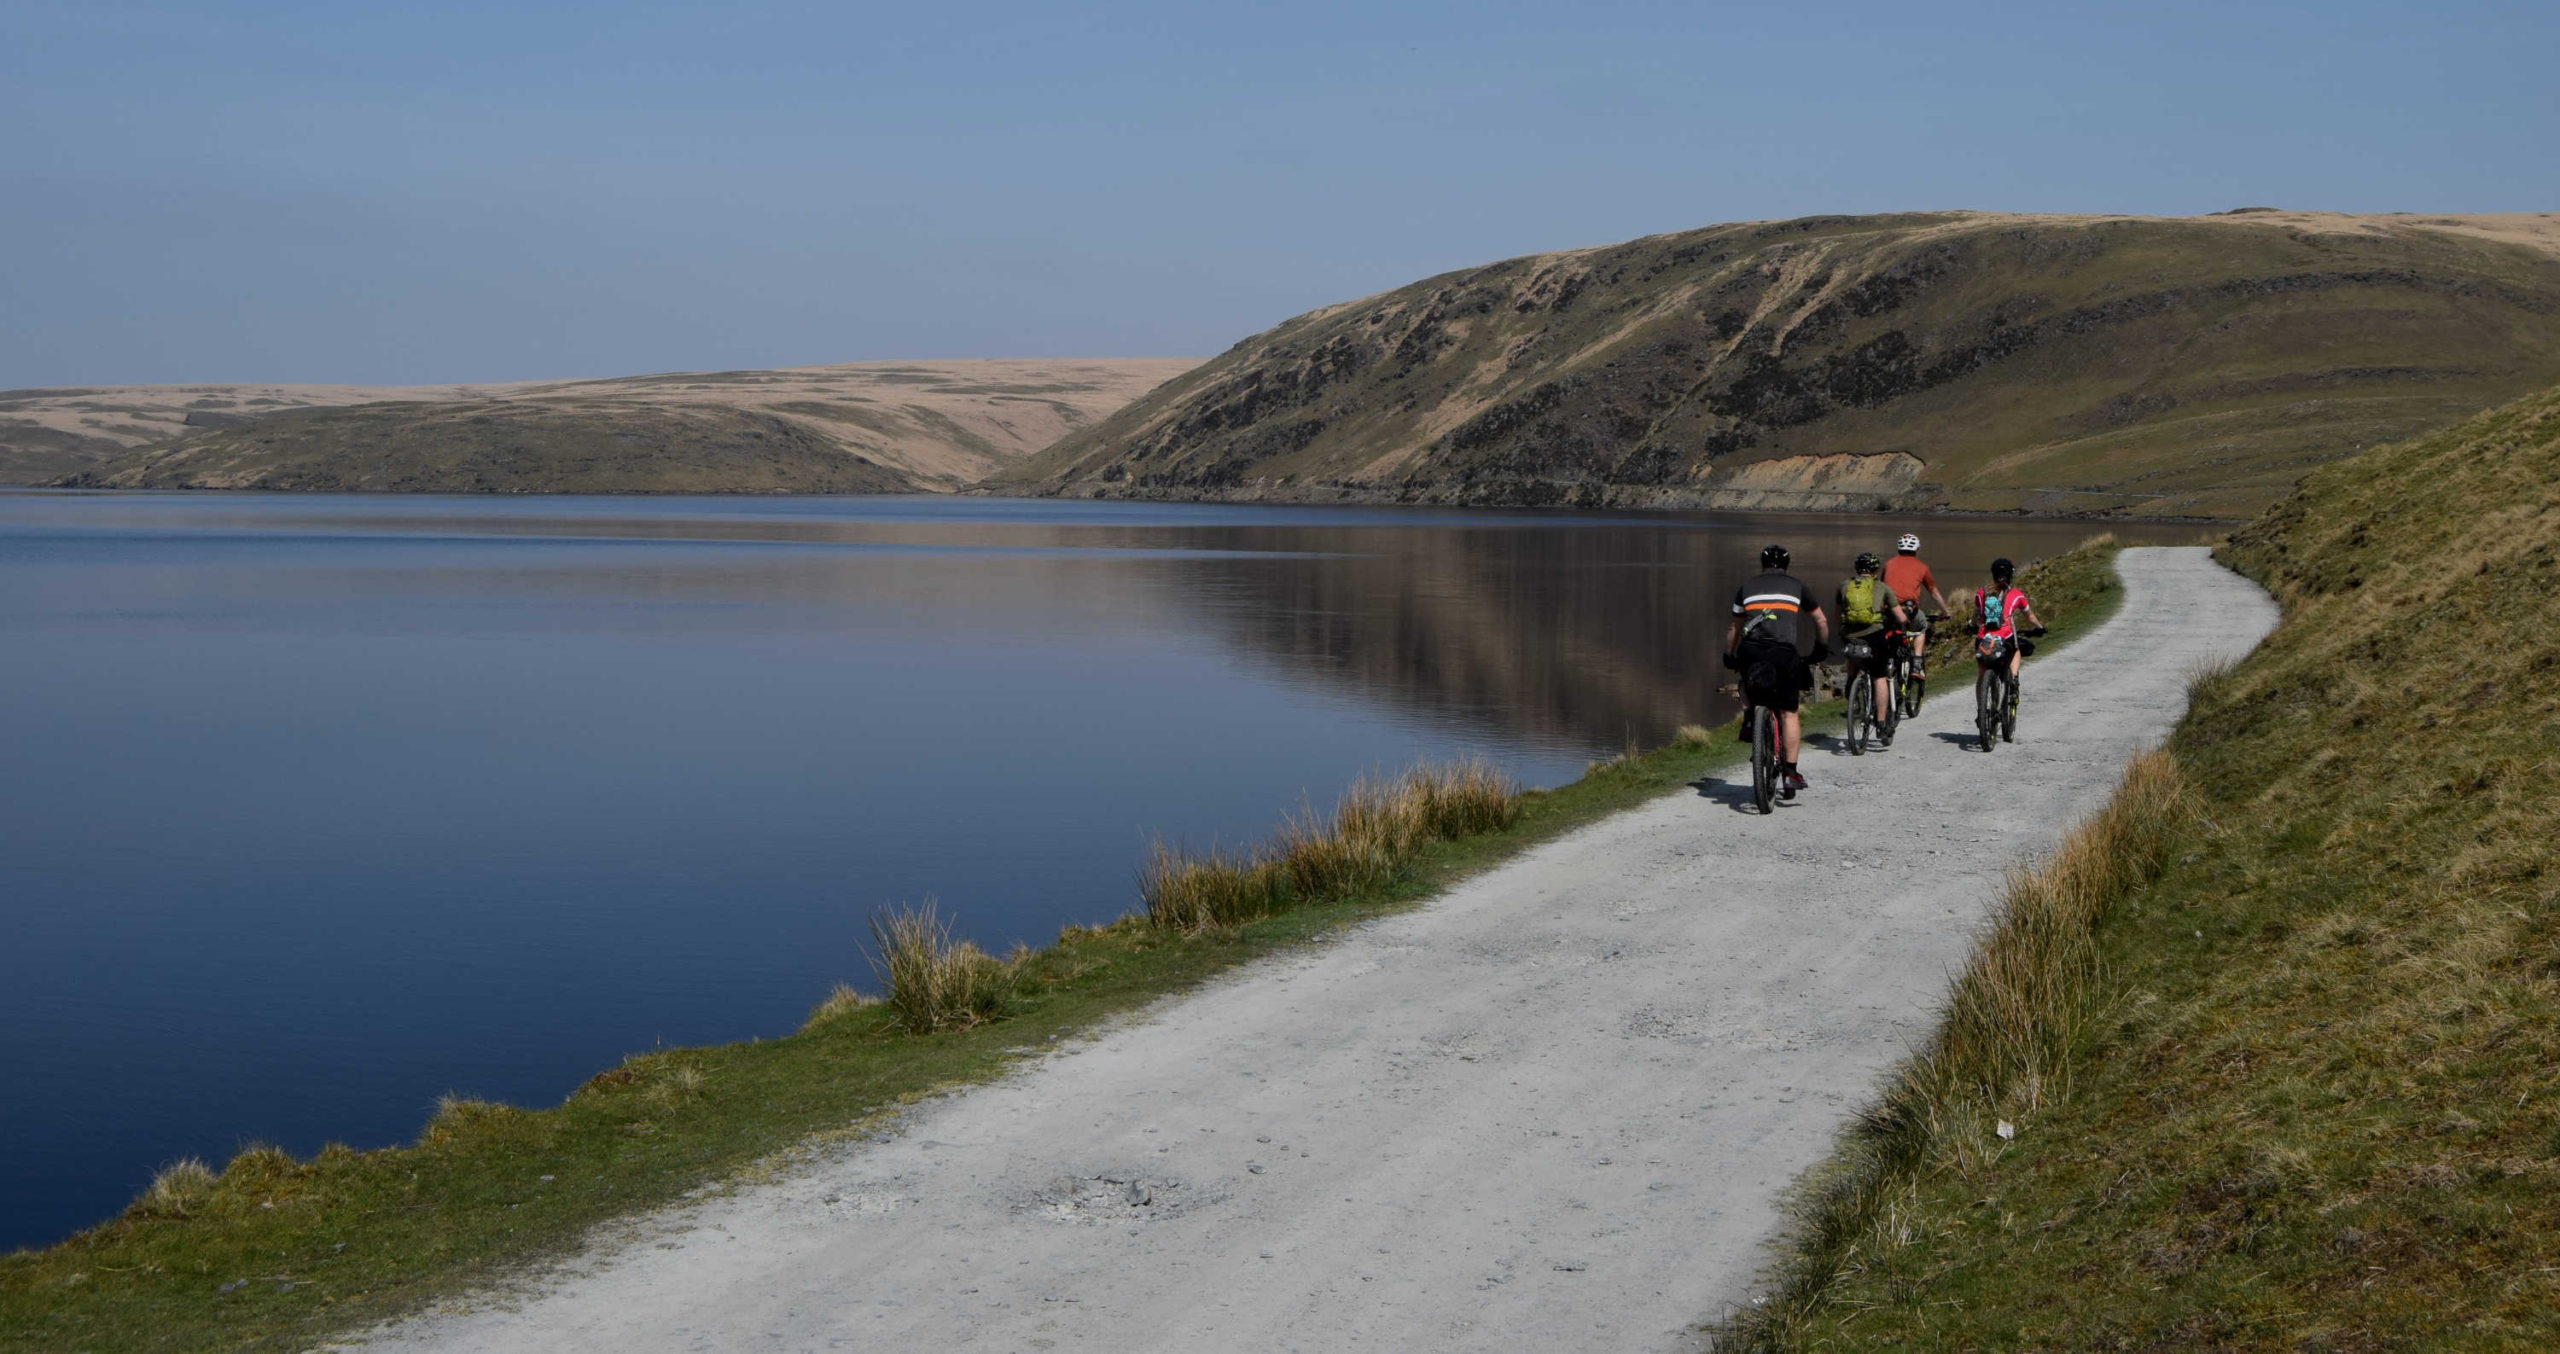 Group cycling alongside a lake